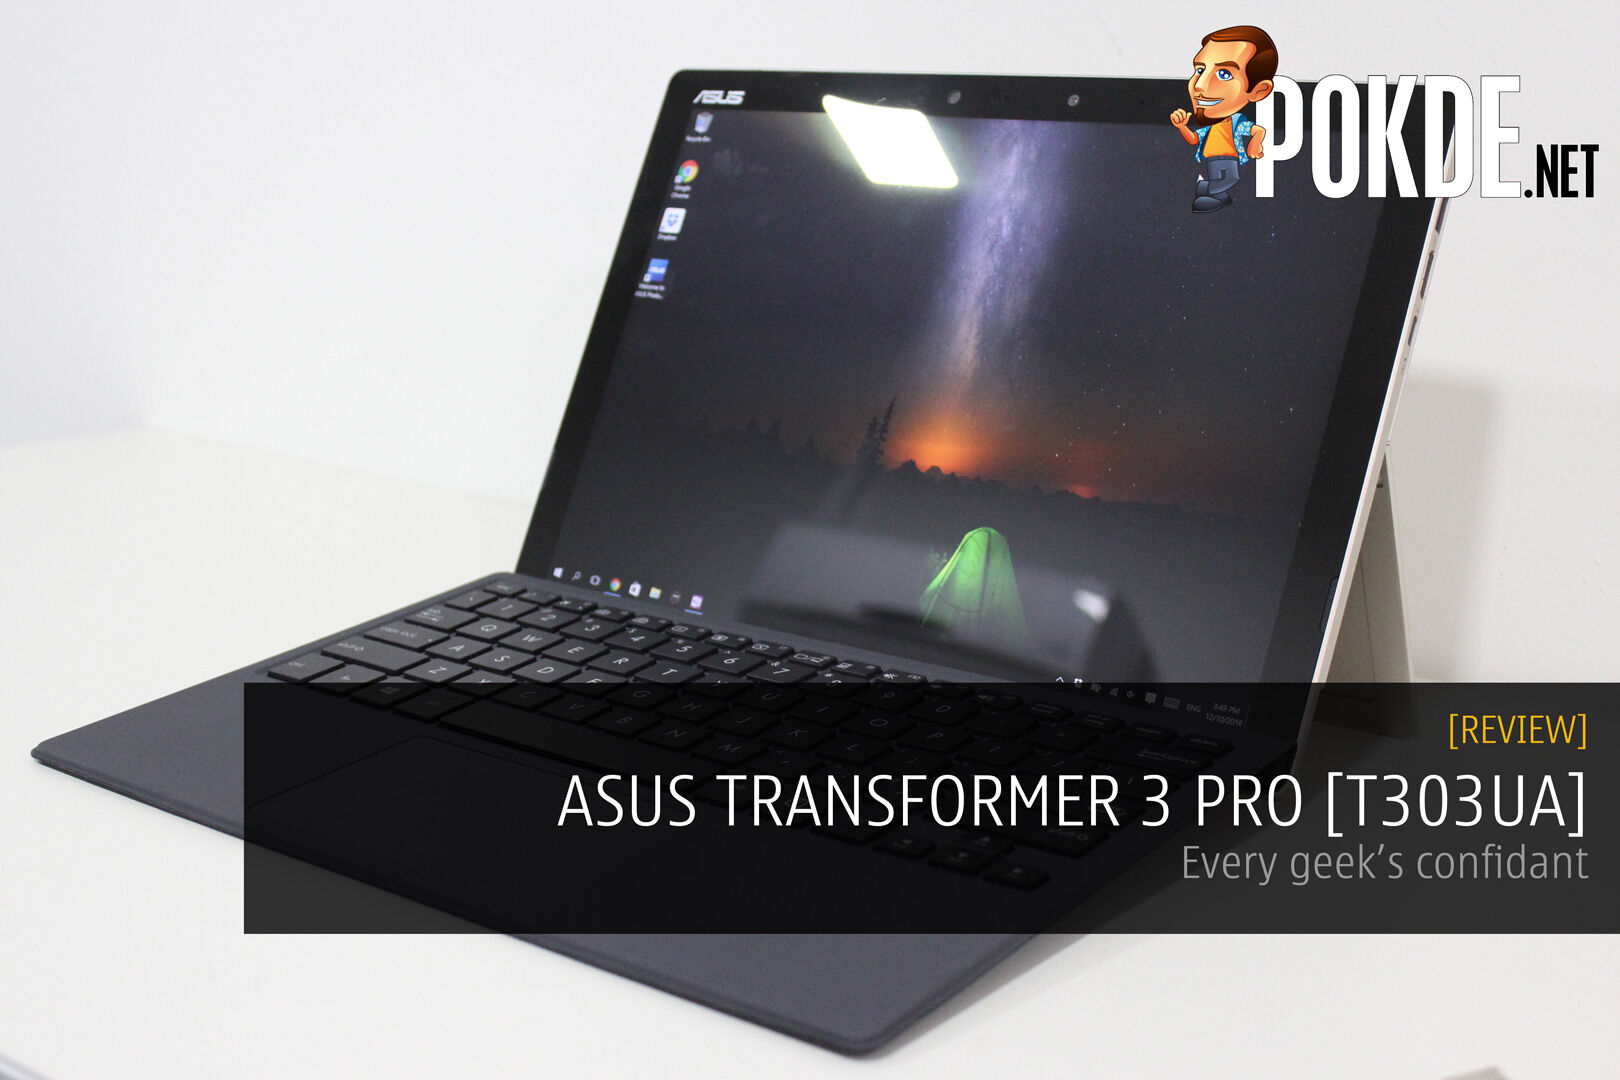 Asus Transformer 3 Pro review [T303UA] - Every geeks confidant 21